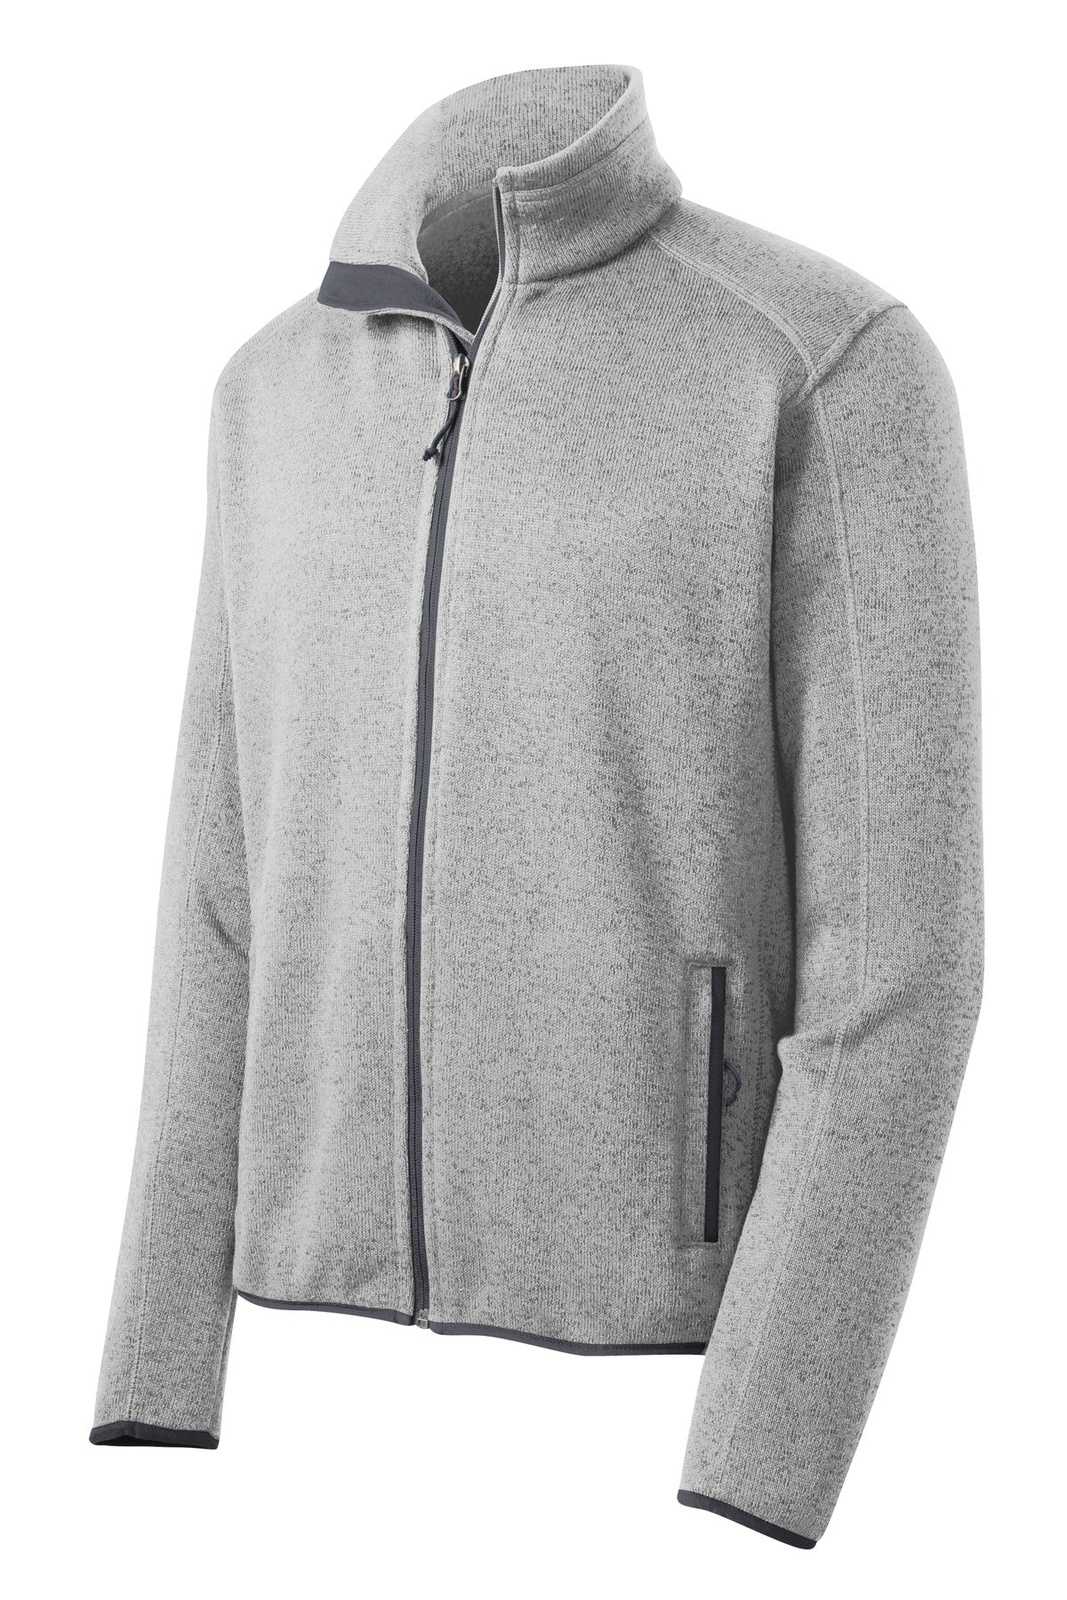 Port Authority F232 Sweater Fleece Jacket - Gray Heather - HIT a Double - 5